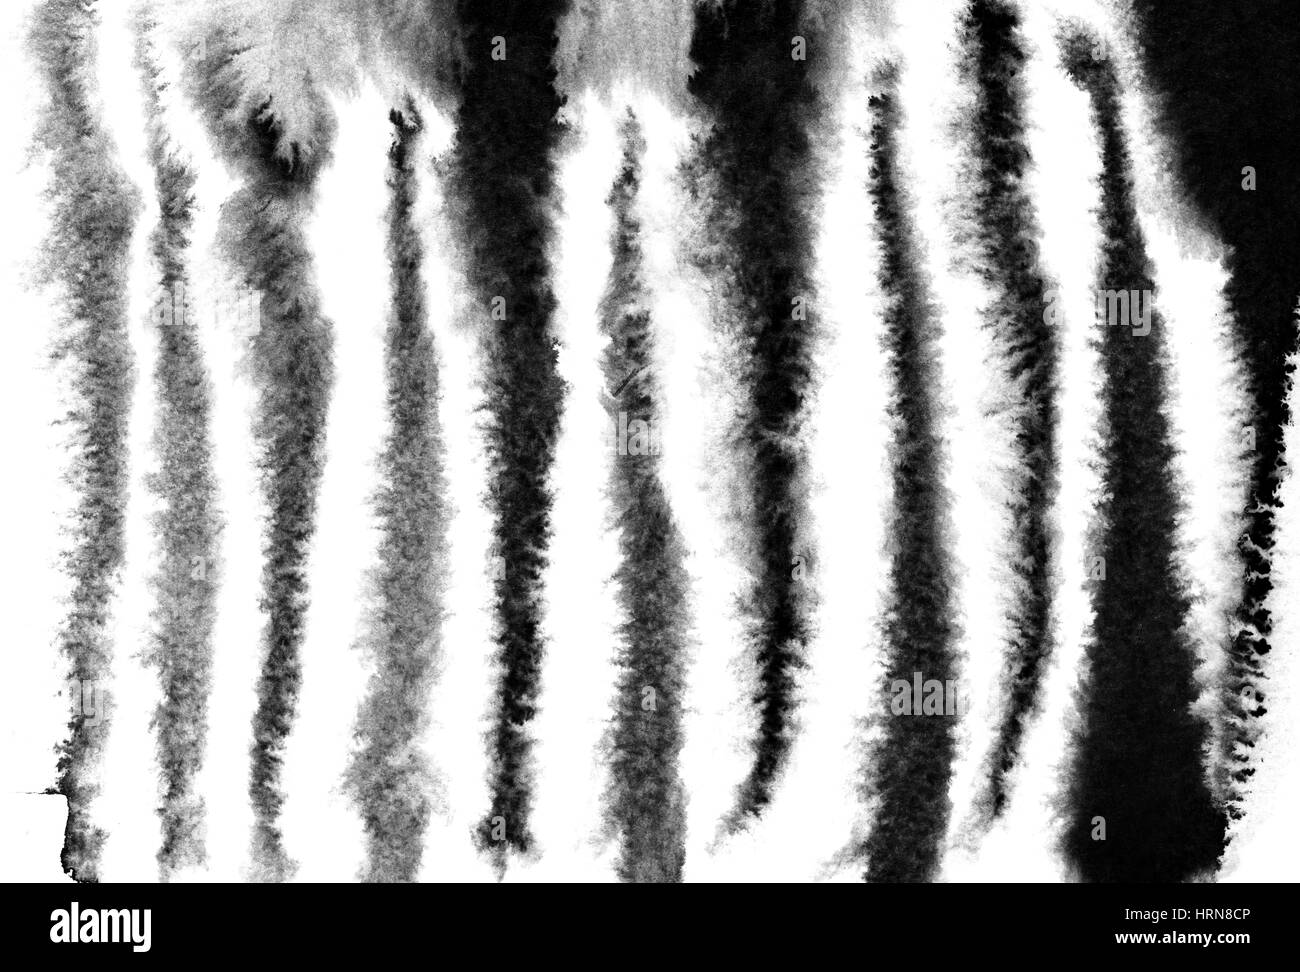 Watercolor zebra stripes pattern - raster illustration Stock Photo